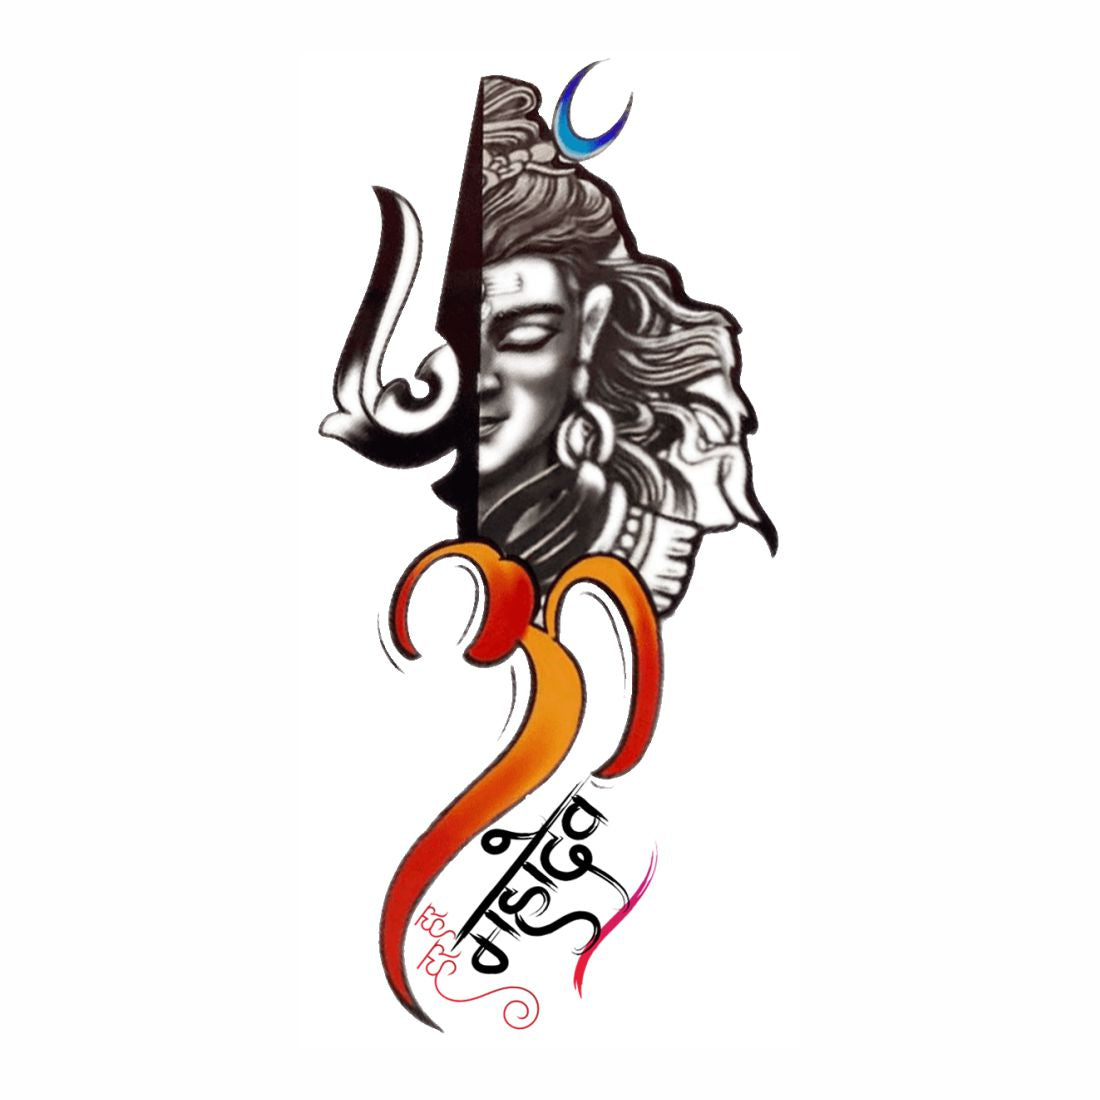 Cool Shiva tattoos Show us... - Lord Shiva and Spirituality | Facebook